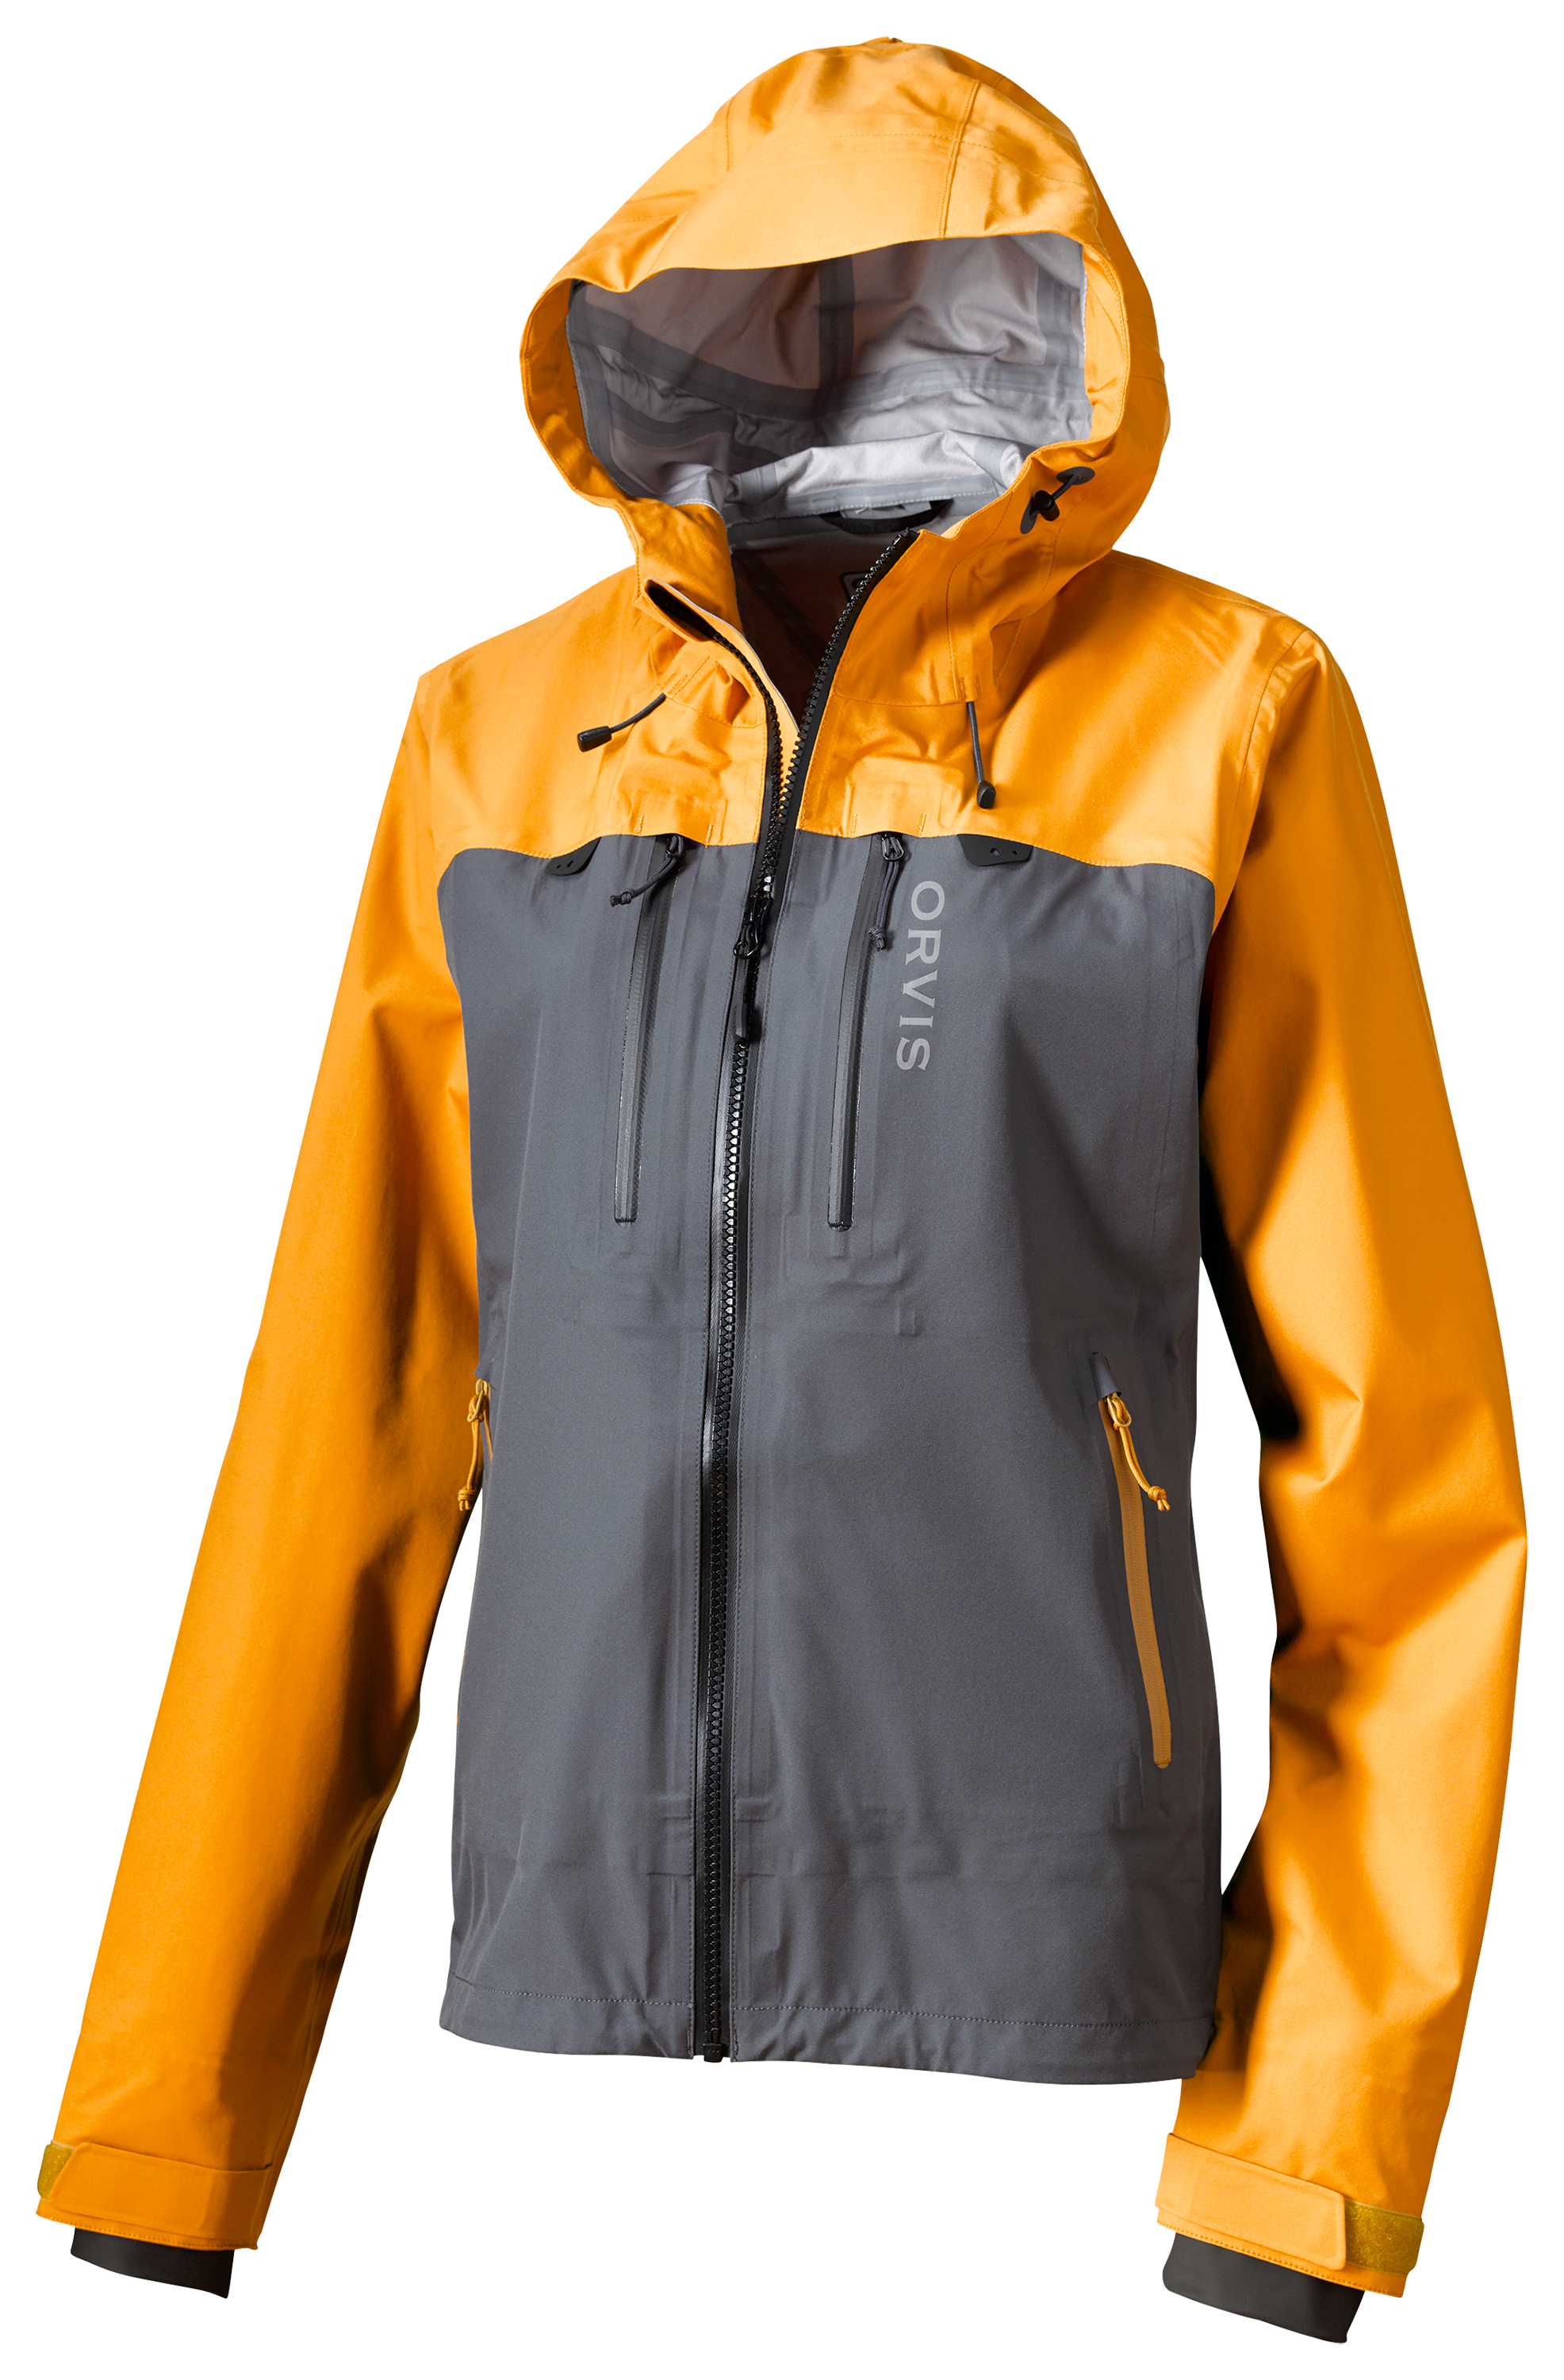 Orvis Ultralight Wading Jacket - Waterproof Breathable Fishing Coat Clothing